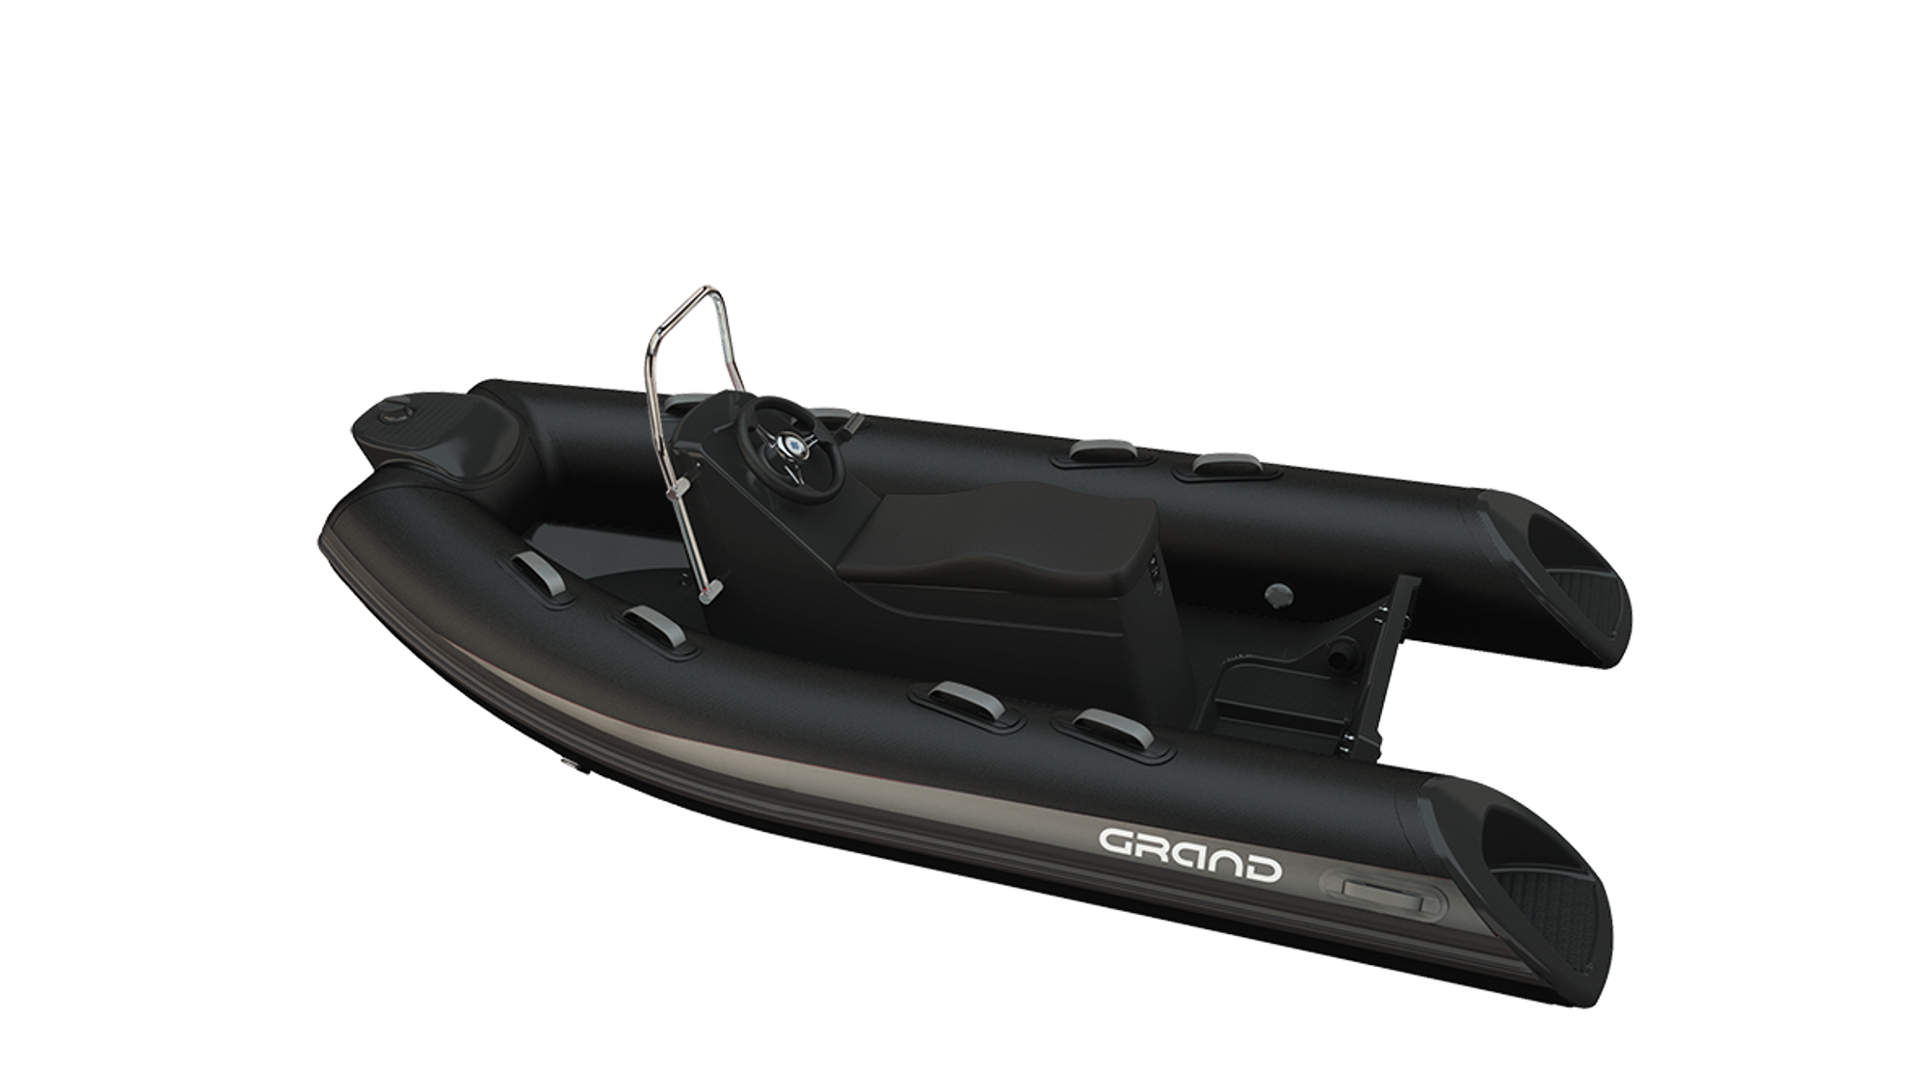 Надувная лодка с жестким дном GRAND Silver Line S300S, Надувная лодка GRAND Silver Line S300S, GRAND Silver Line S300S, GRAND Silver Line S300SF, GRAND S300S, GRAND S300SF, GRAND S300, Rigid Inflatable Boats GRAND, RIB GRAND